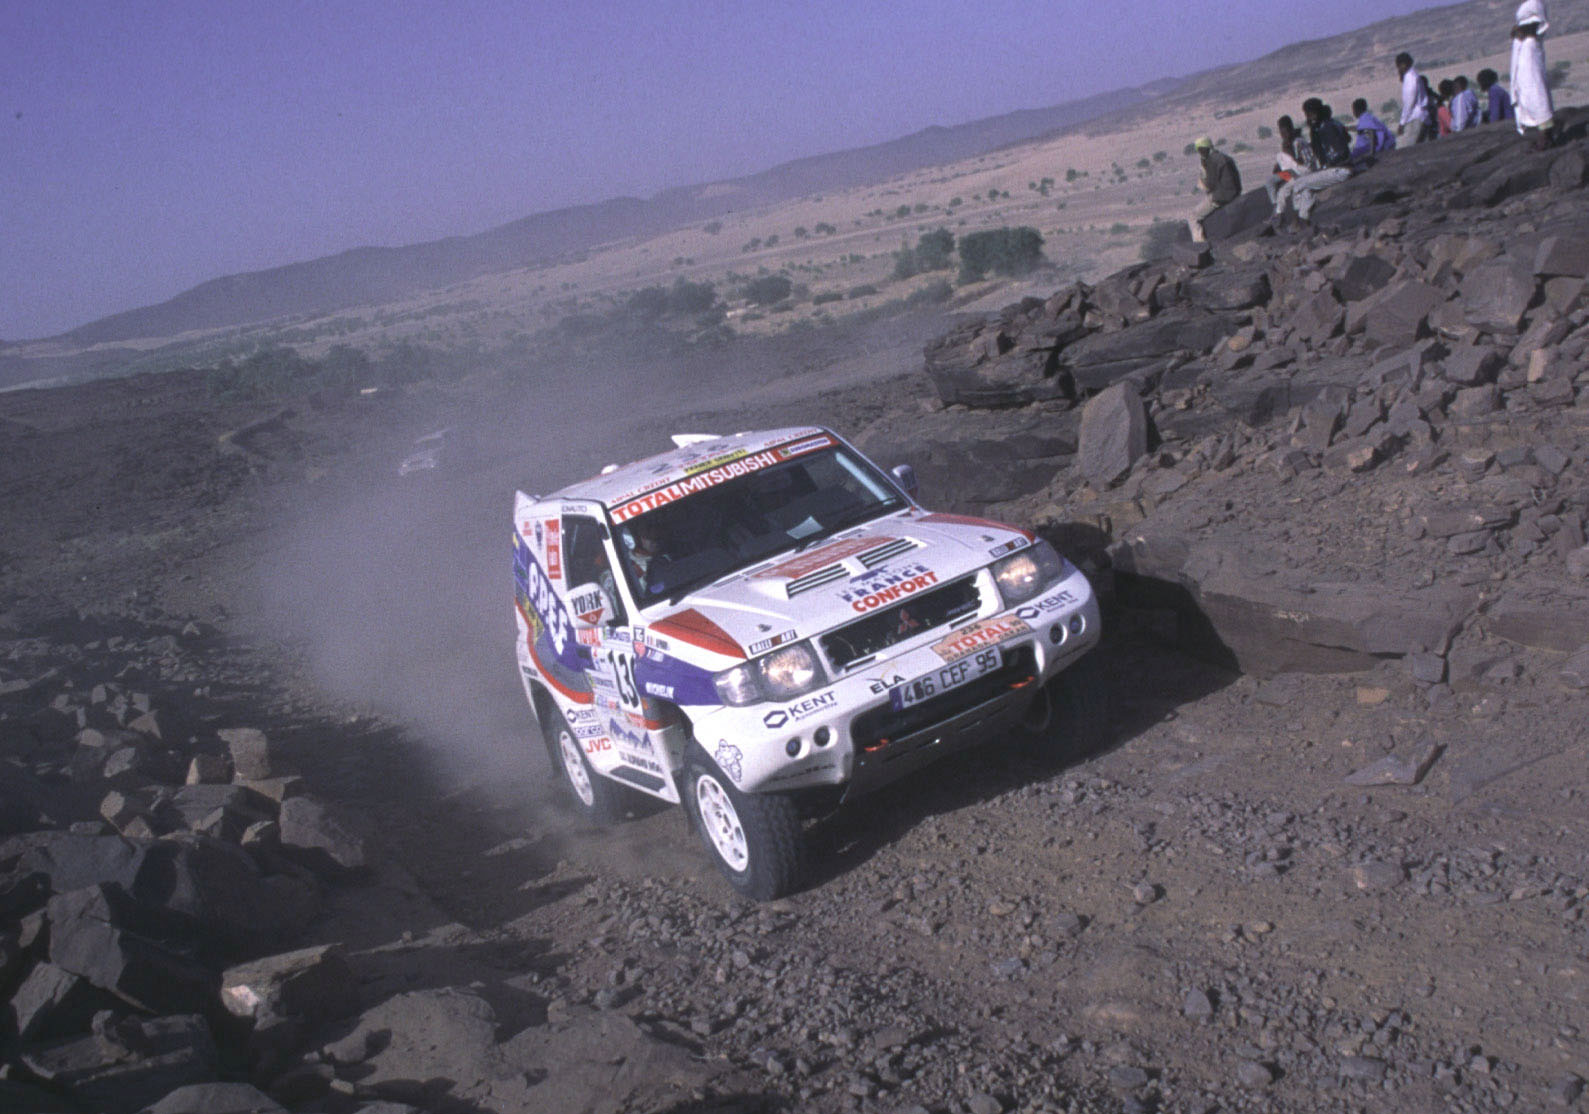 The Mitsubishi Pajero, a Dakar legend.